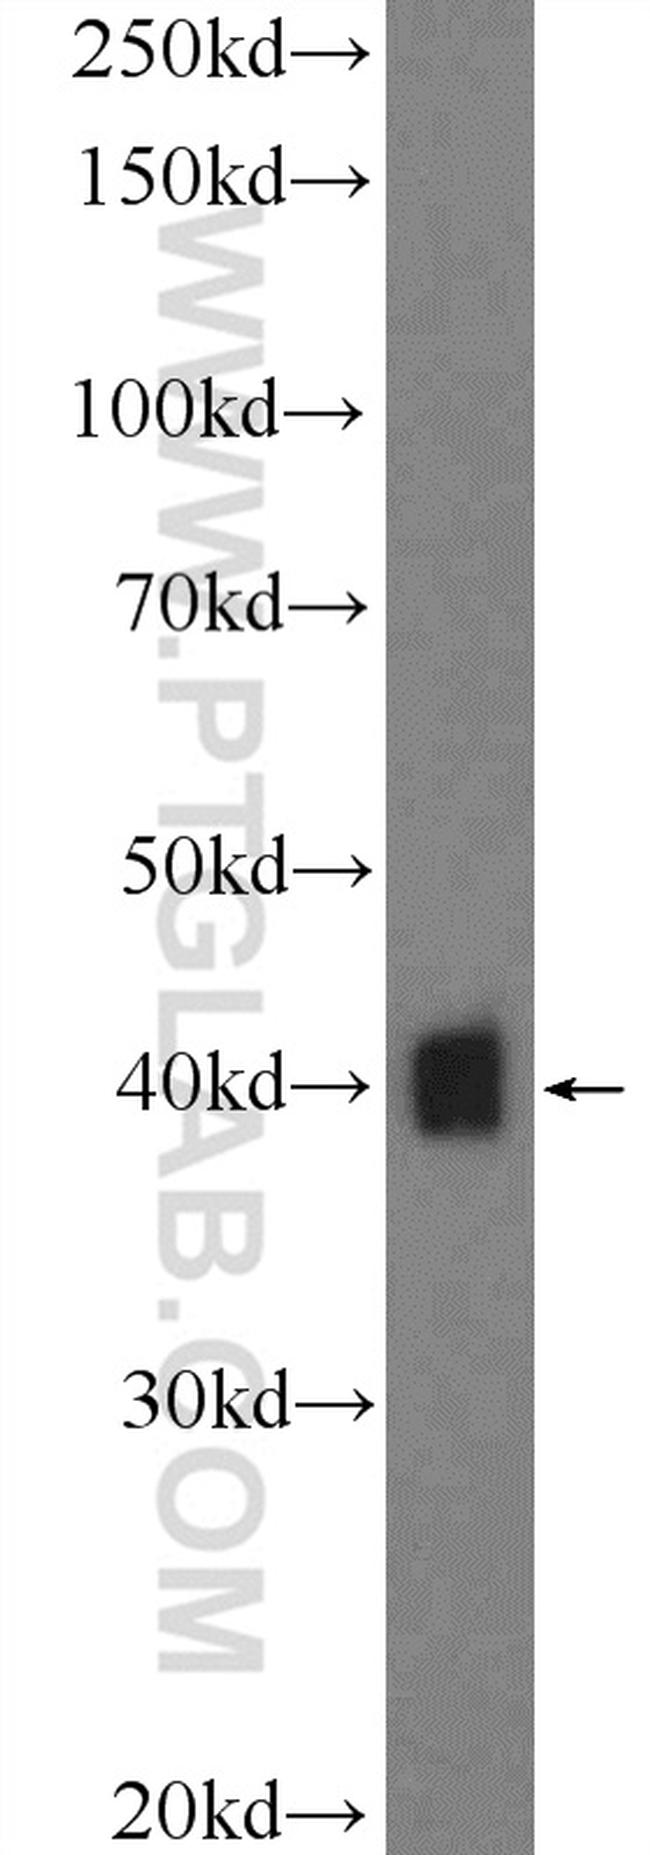 GNAO1 Antibody in Western Blot (WB)